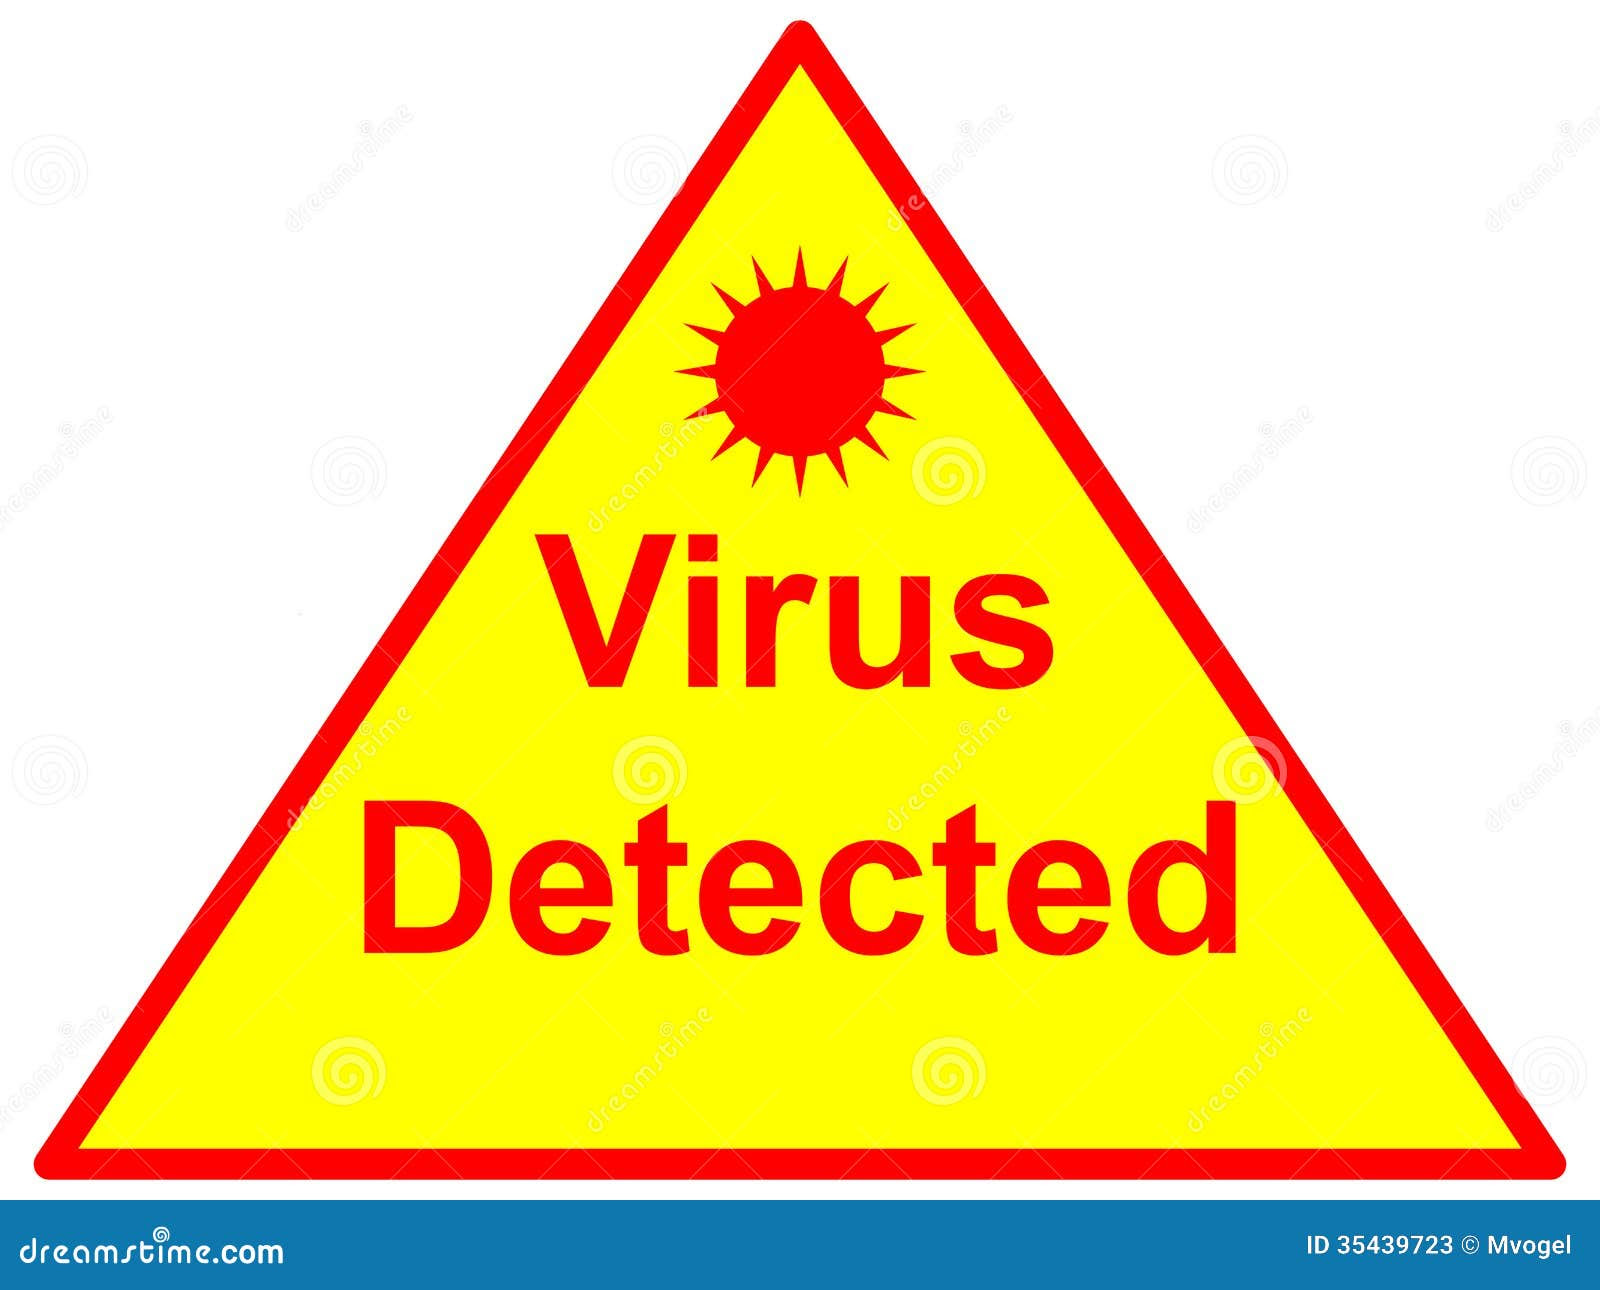 Add detected. Virus detected. Virus detected картинка. Detect картинка. Virus detected gif.